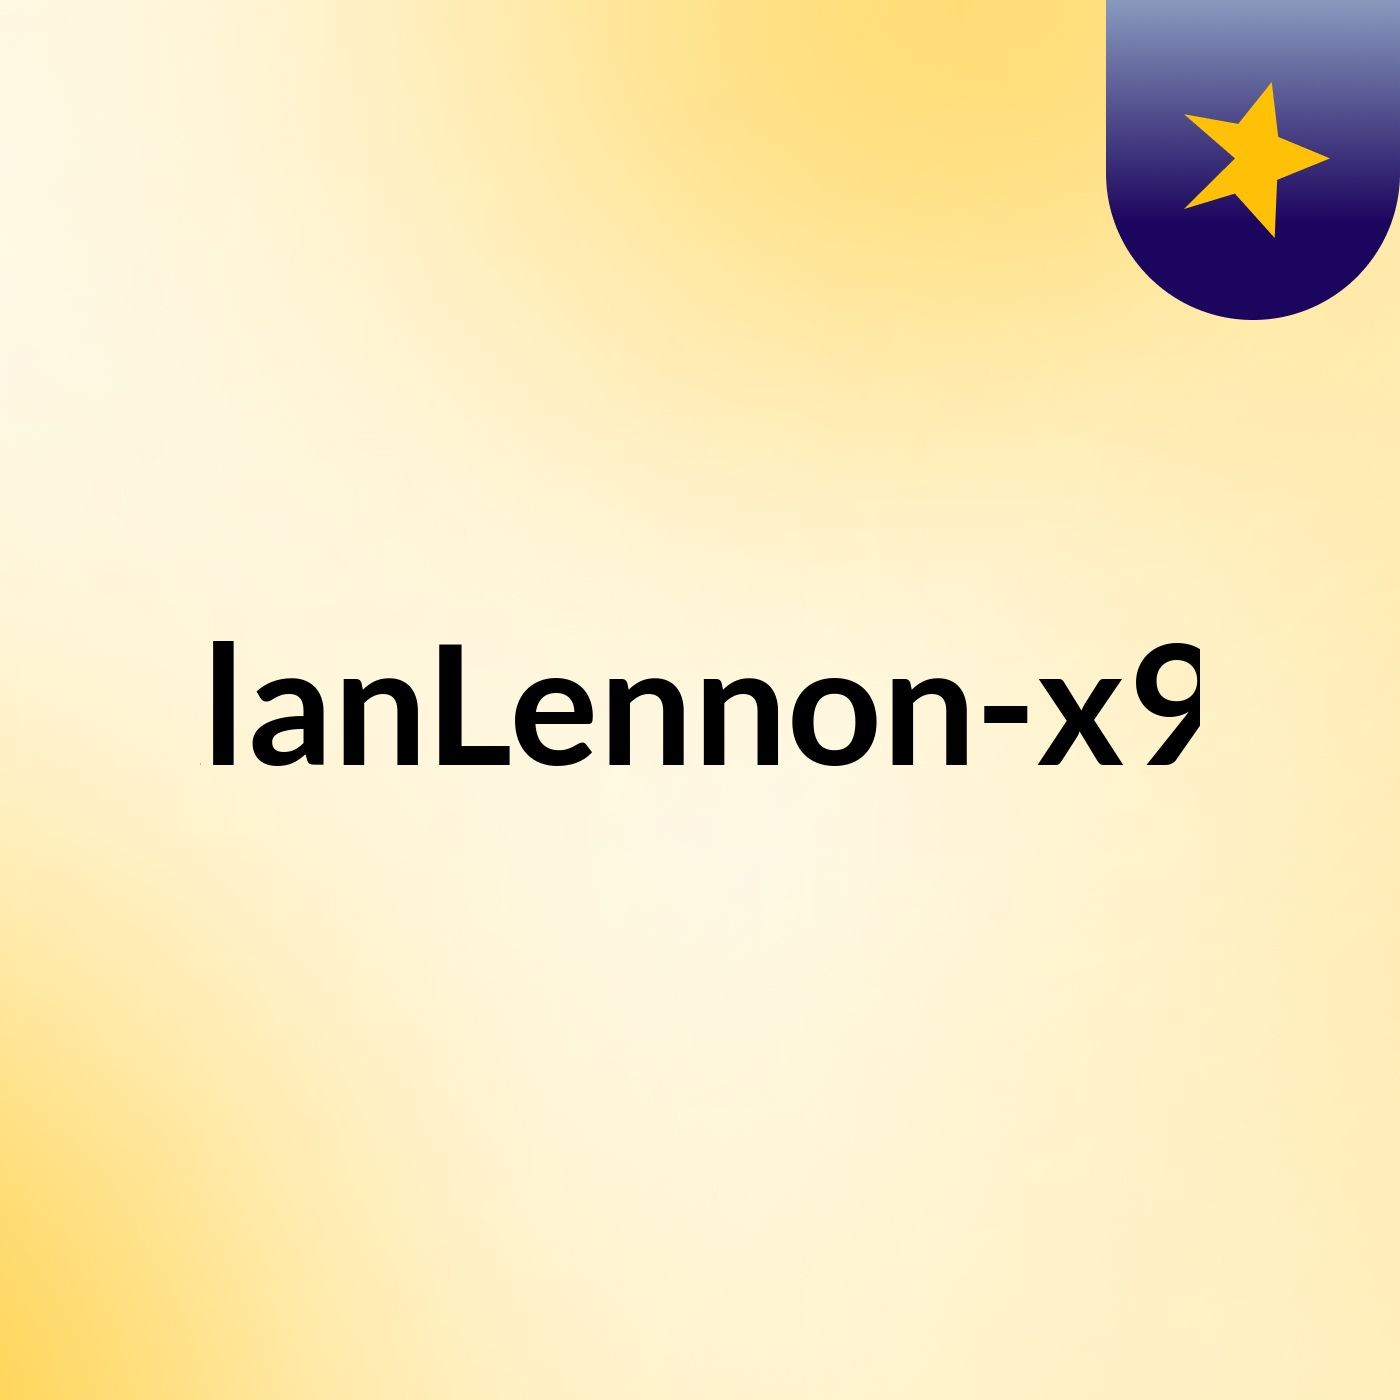 AlanLennon-x94